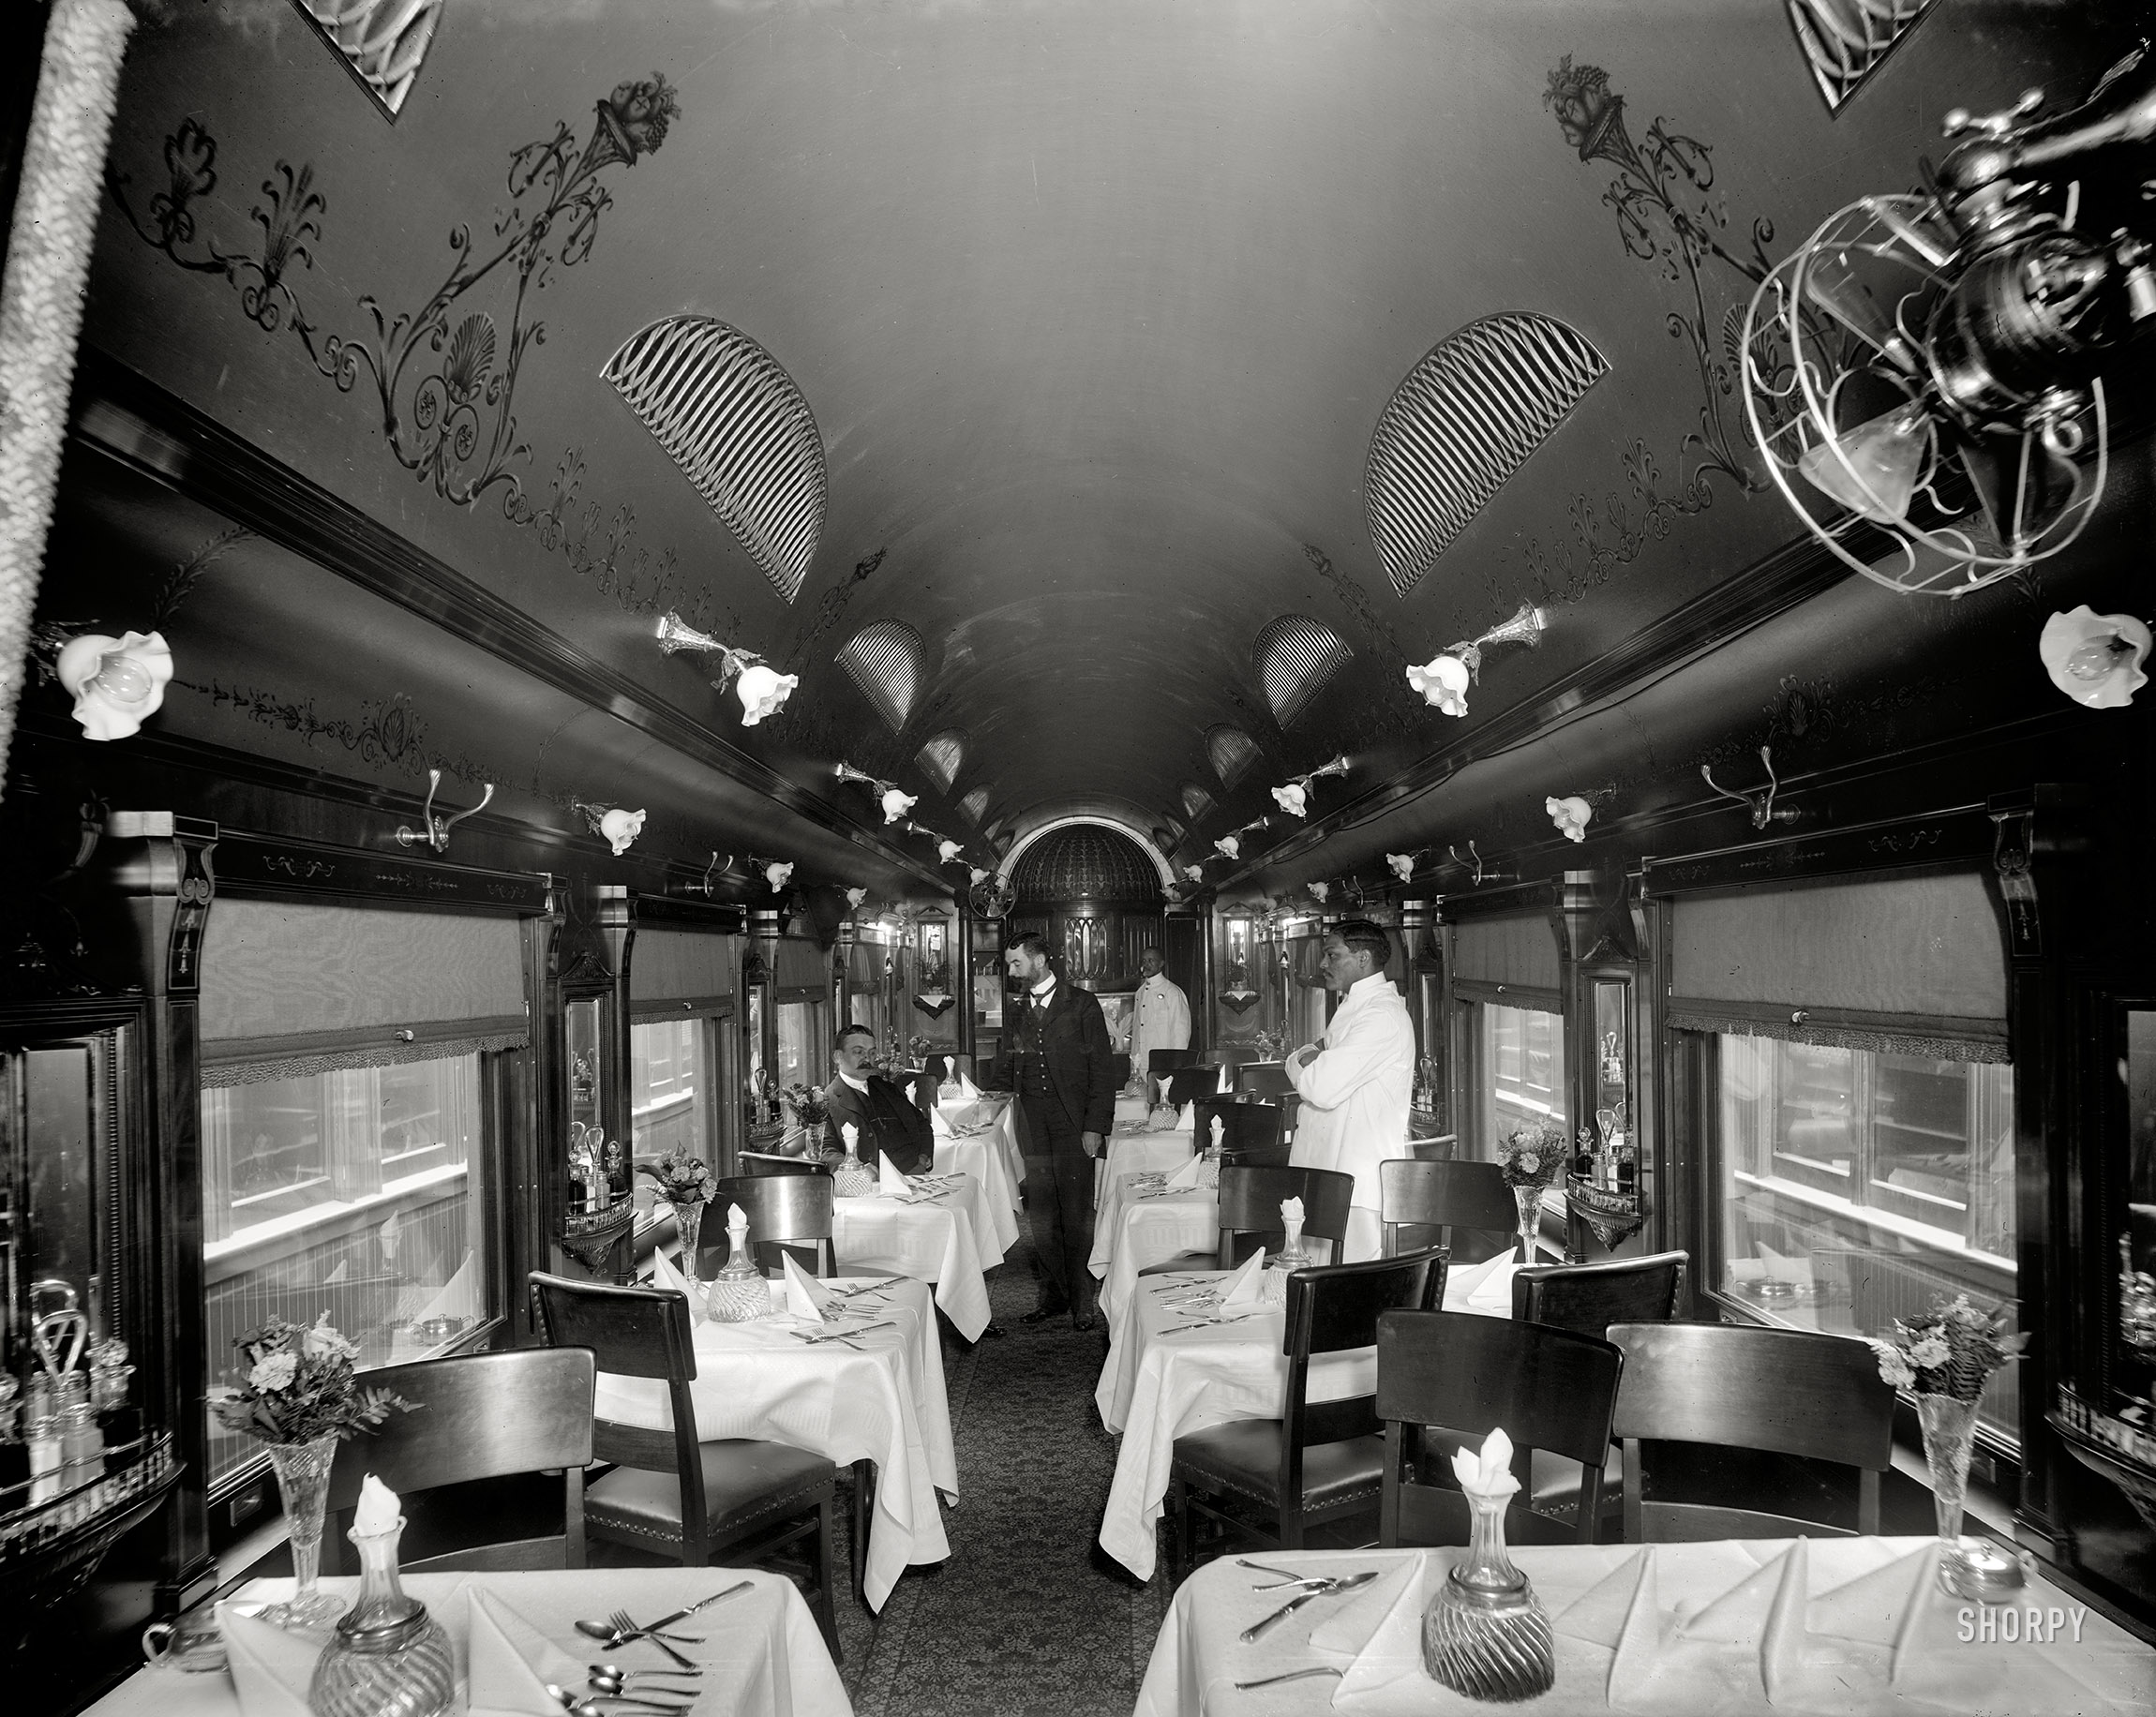 Circa 1902. "Delaware, Lackawanna & Western Railroad dining car." 8x10 inch dry plate glass negative, Detroit Publishing Company. View full size.